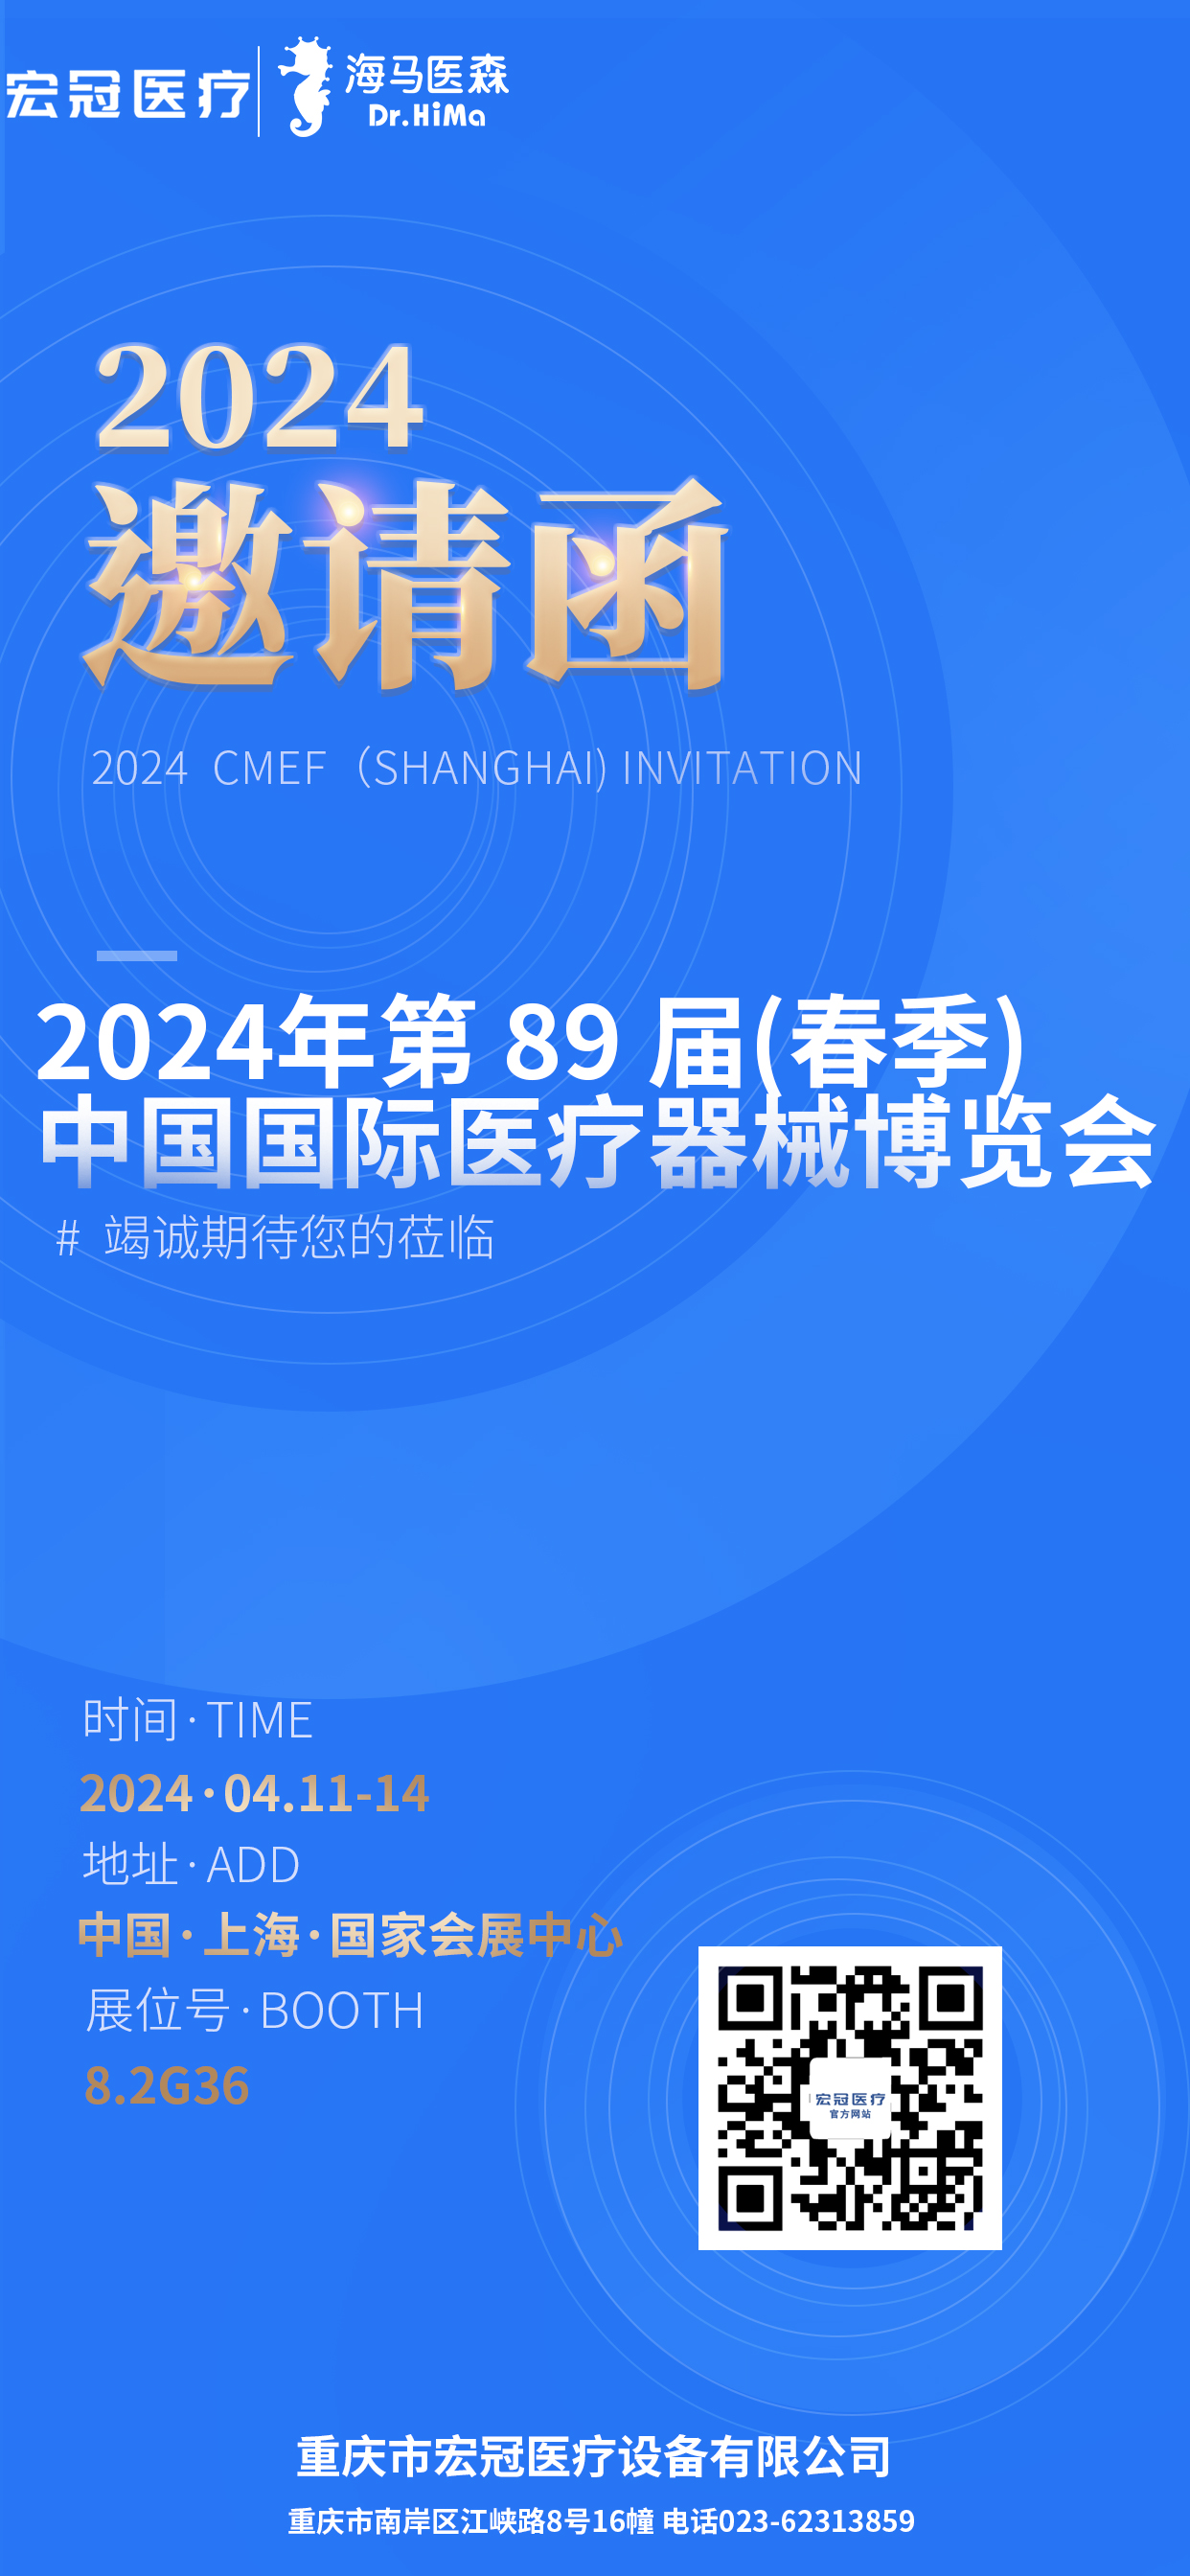 Isimemo sika-2024 CMEF (Shanghai)